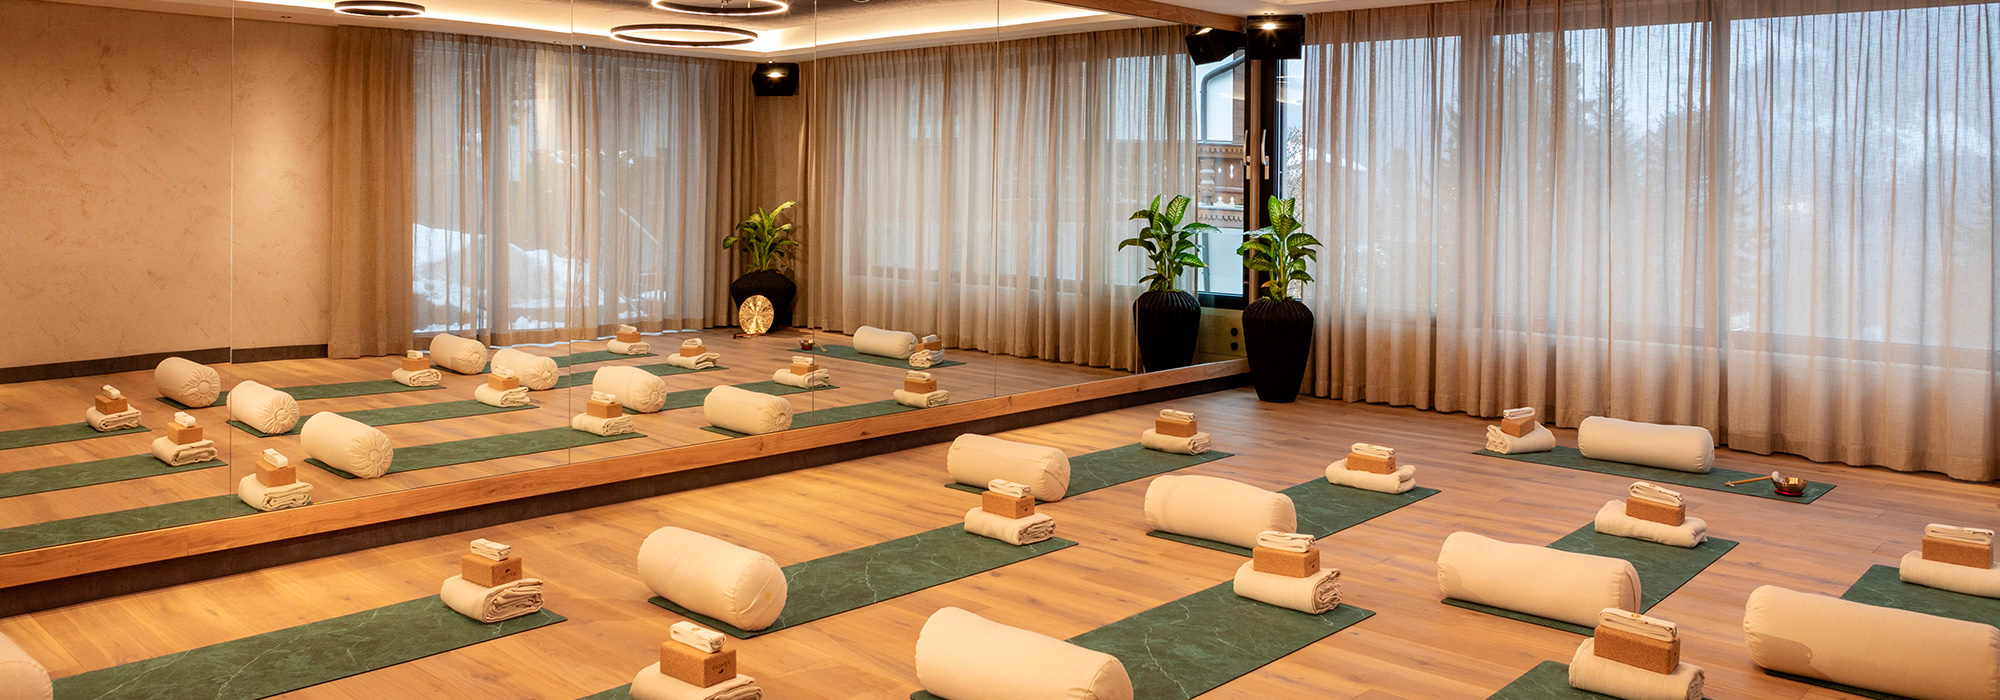 Yoga room in the Hotel Alpendorf